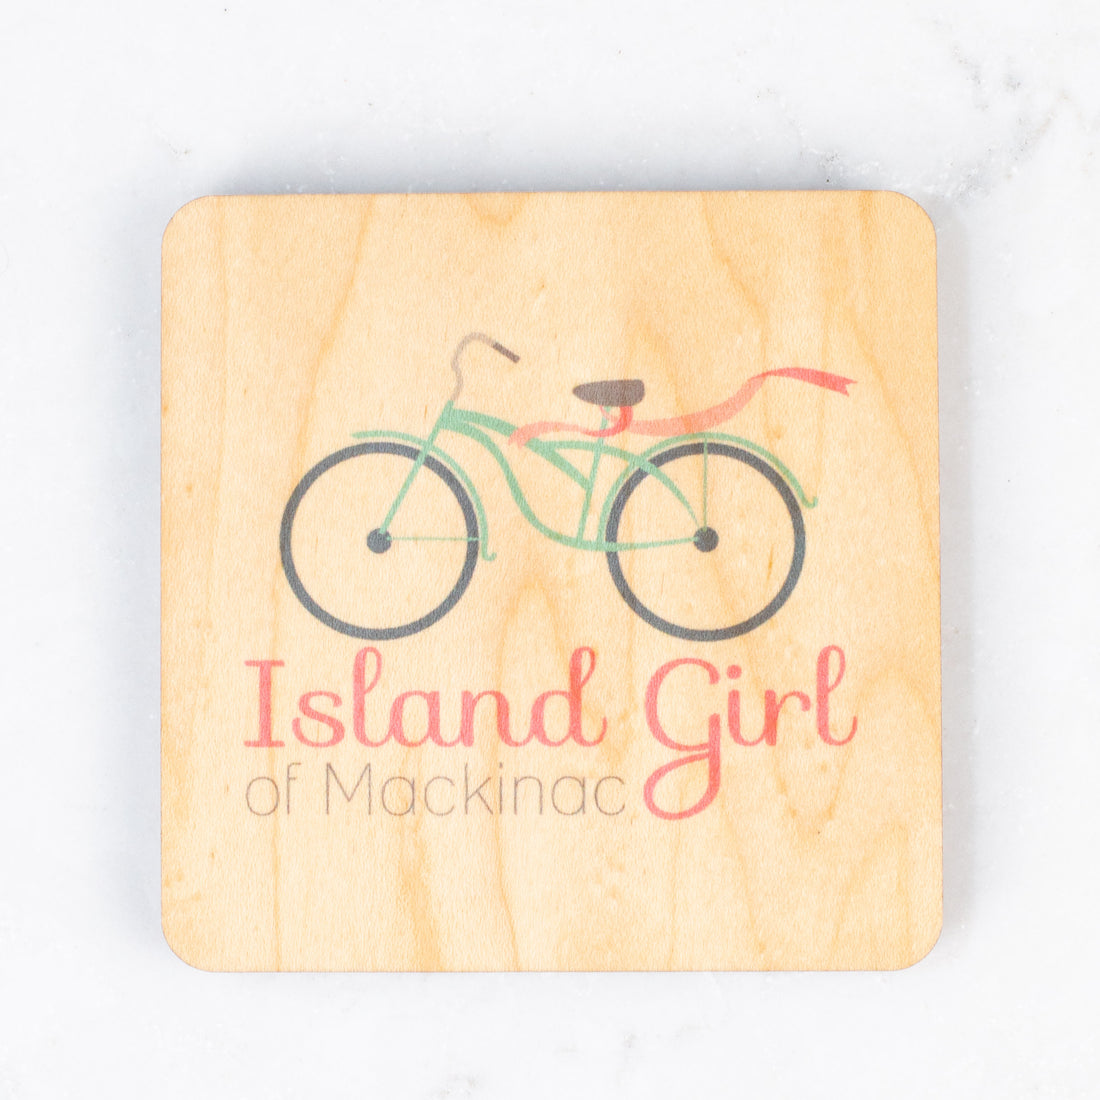 Island Girl Magnet